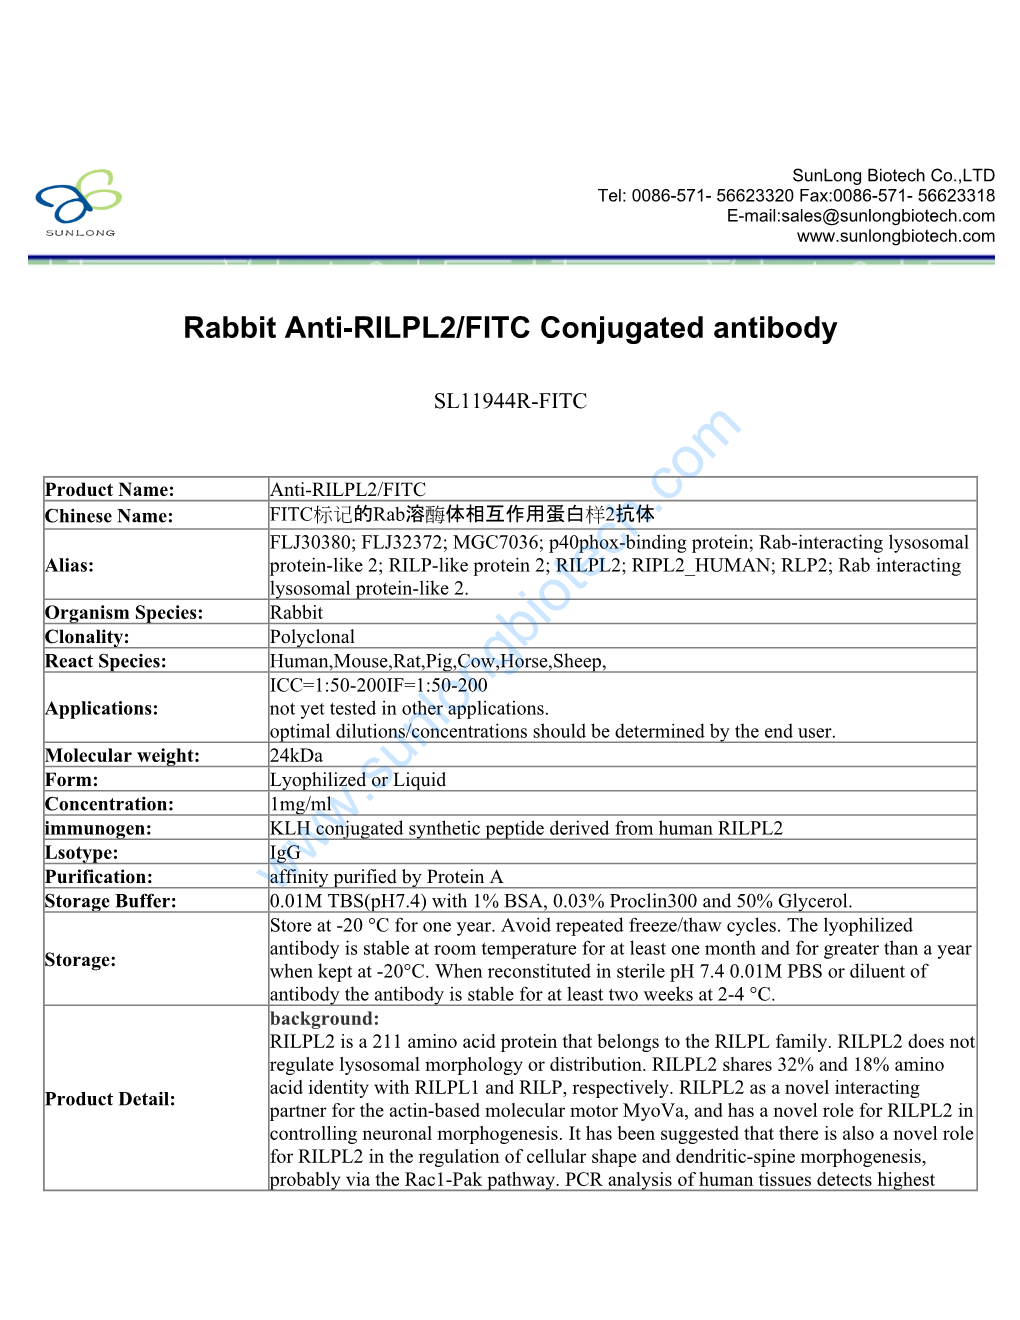 Rabbit Anti-RILPL2/FITC Conjugated Antibody-SL11944R-FITC